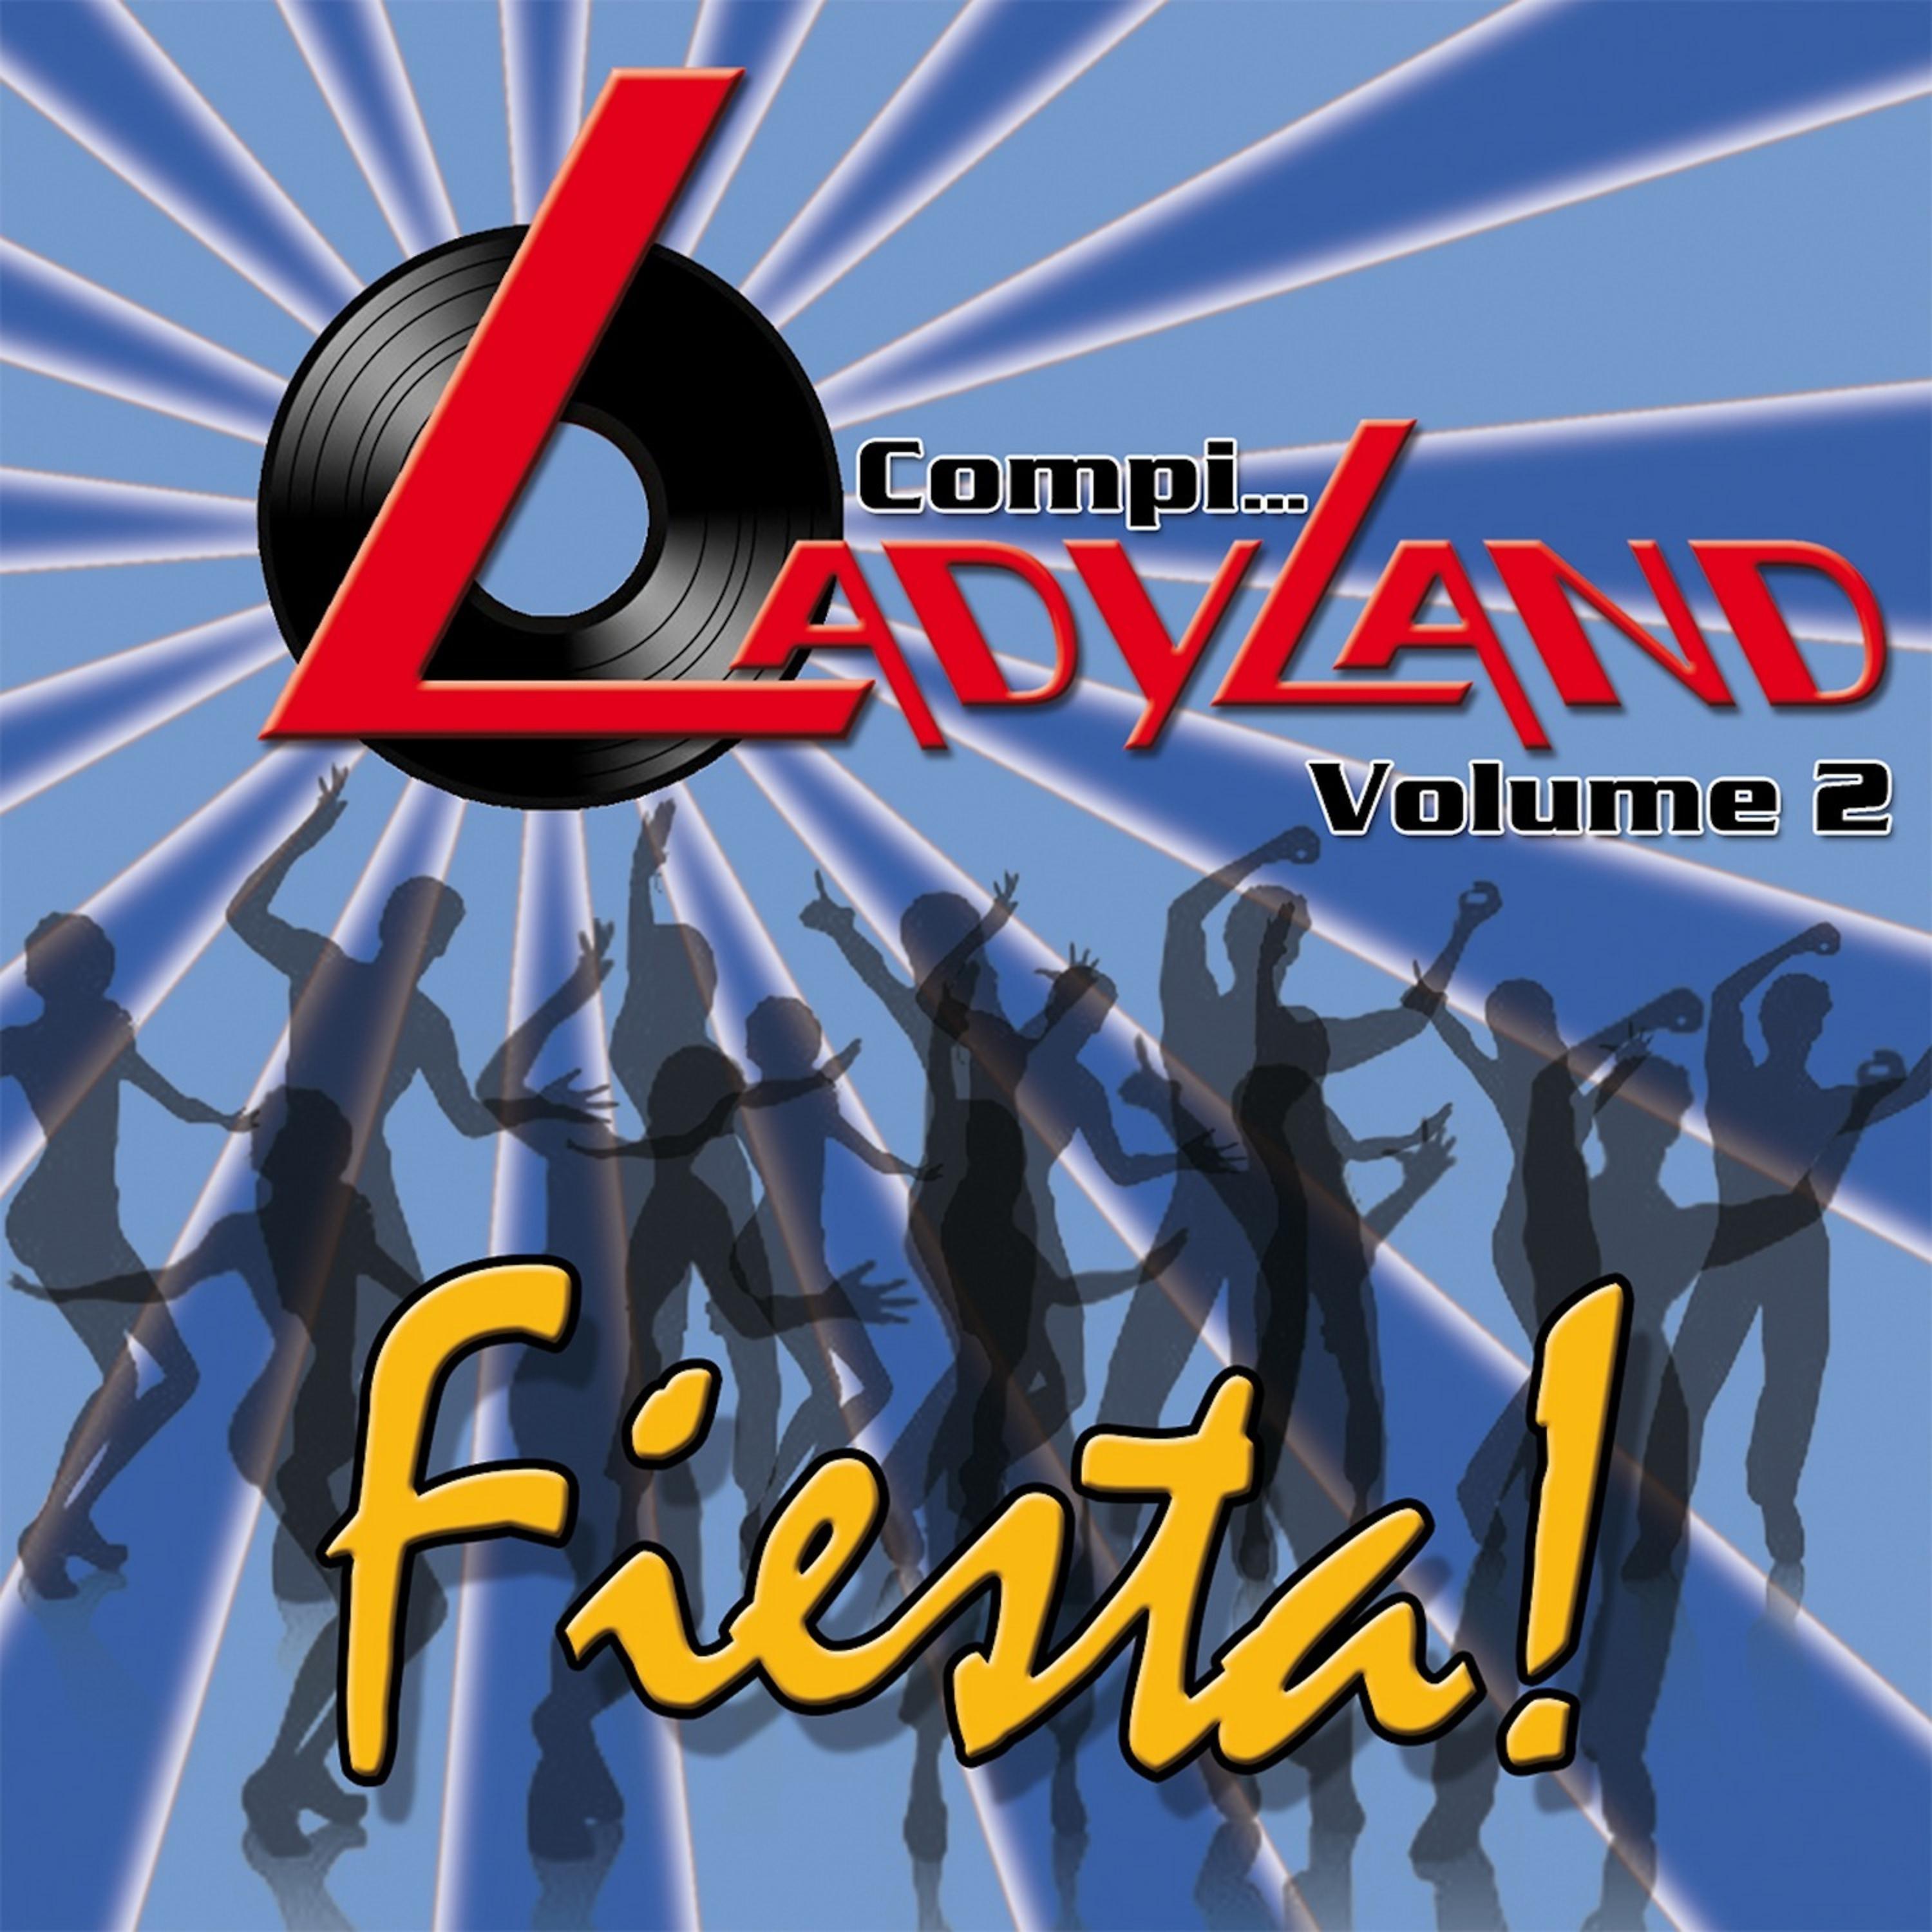 Постер альбома Compi…Ladyland Volume 2 - Fiesta!